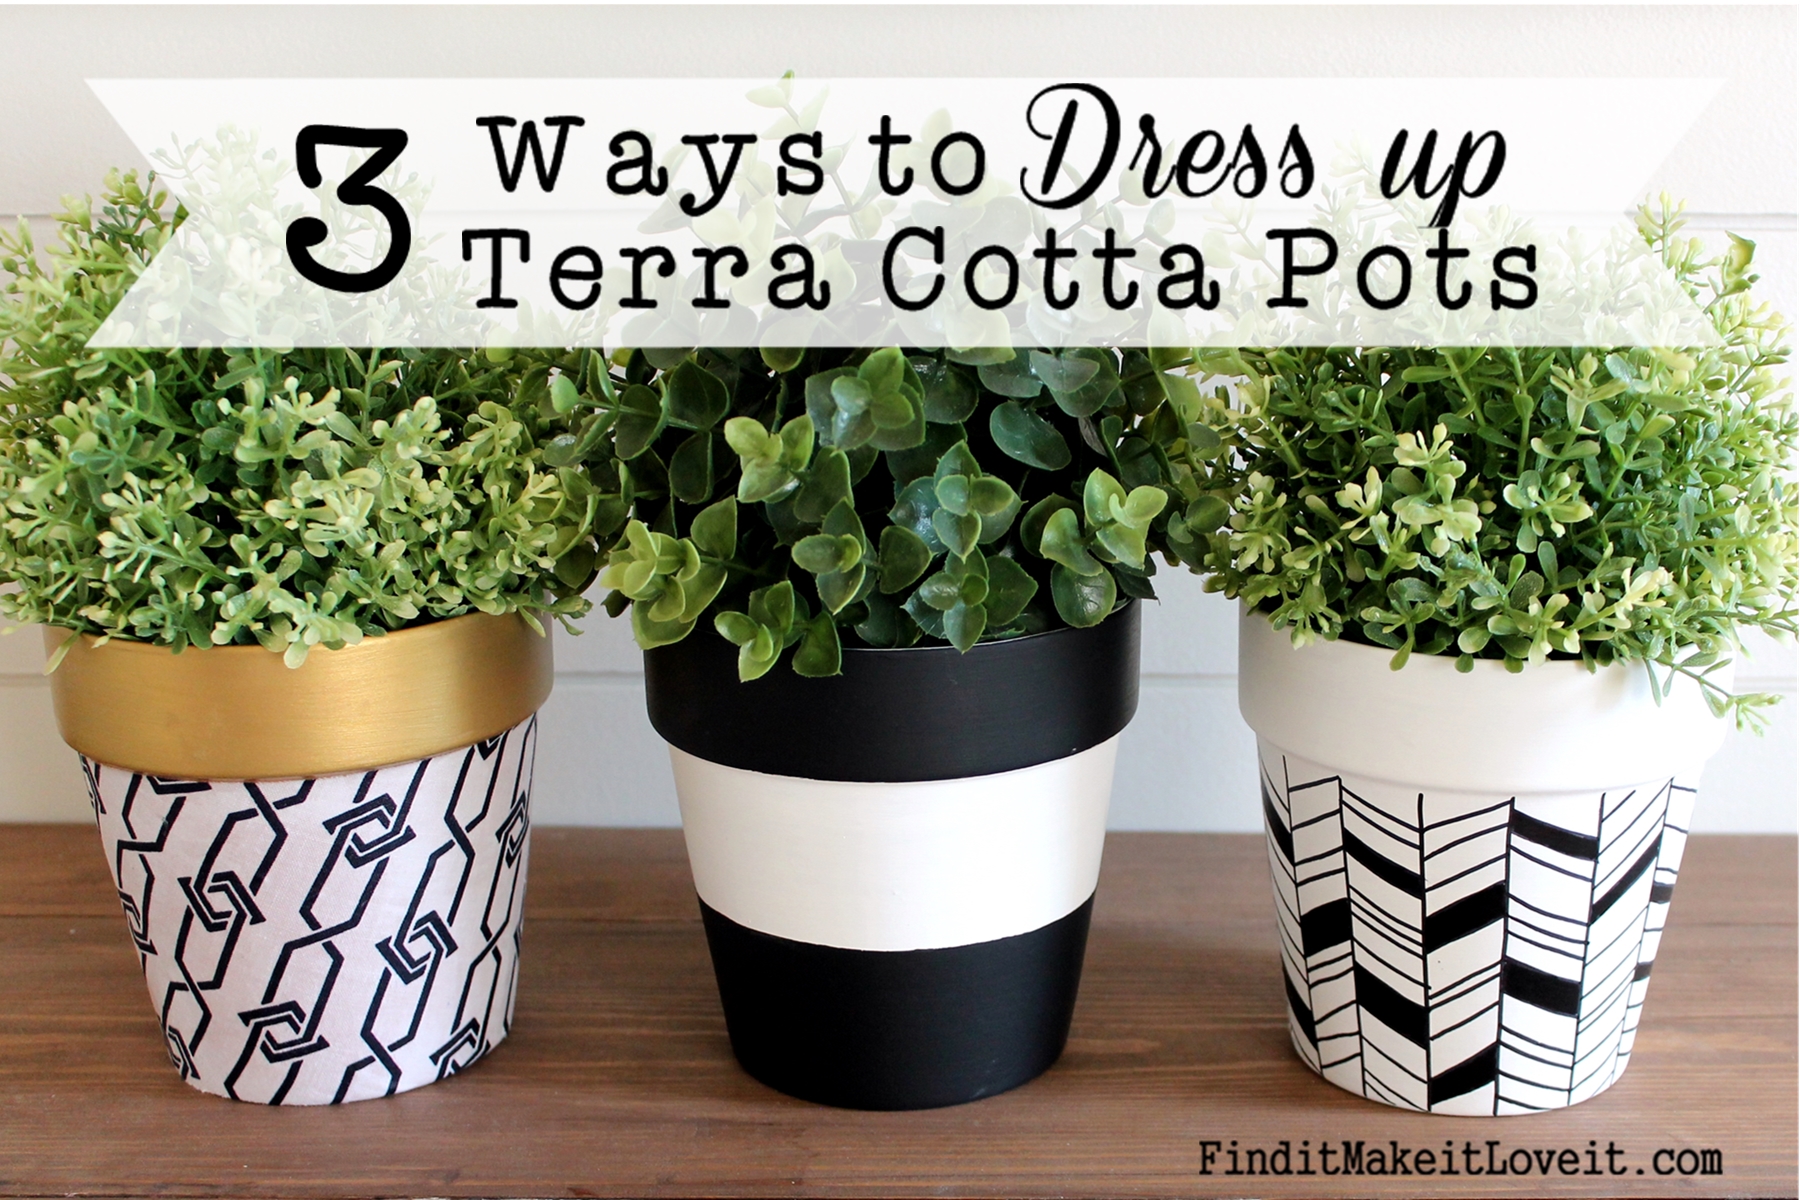 3 Ways to Dress up Terra Cotta Pots - Find it, Make it, Love it